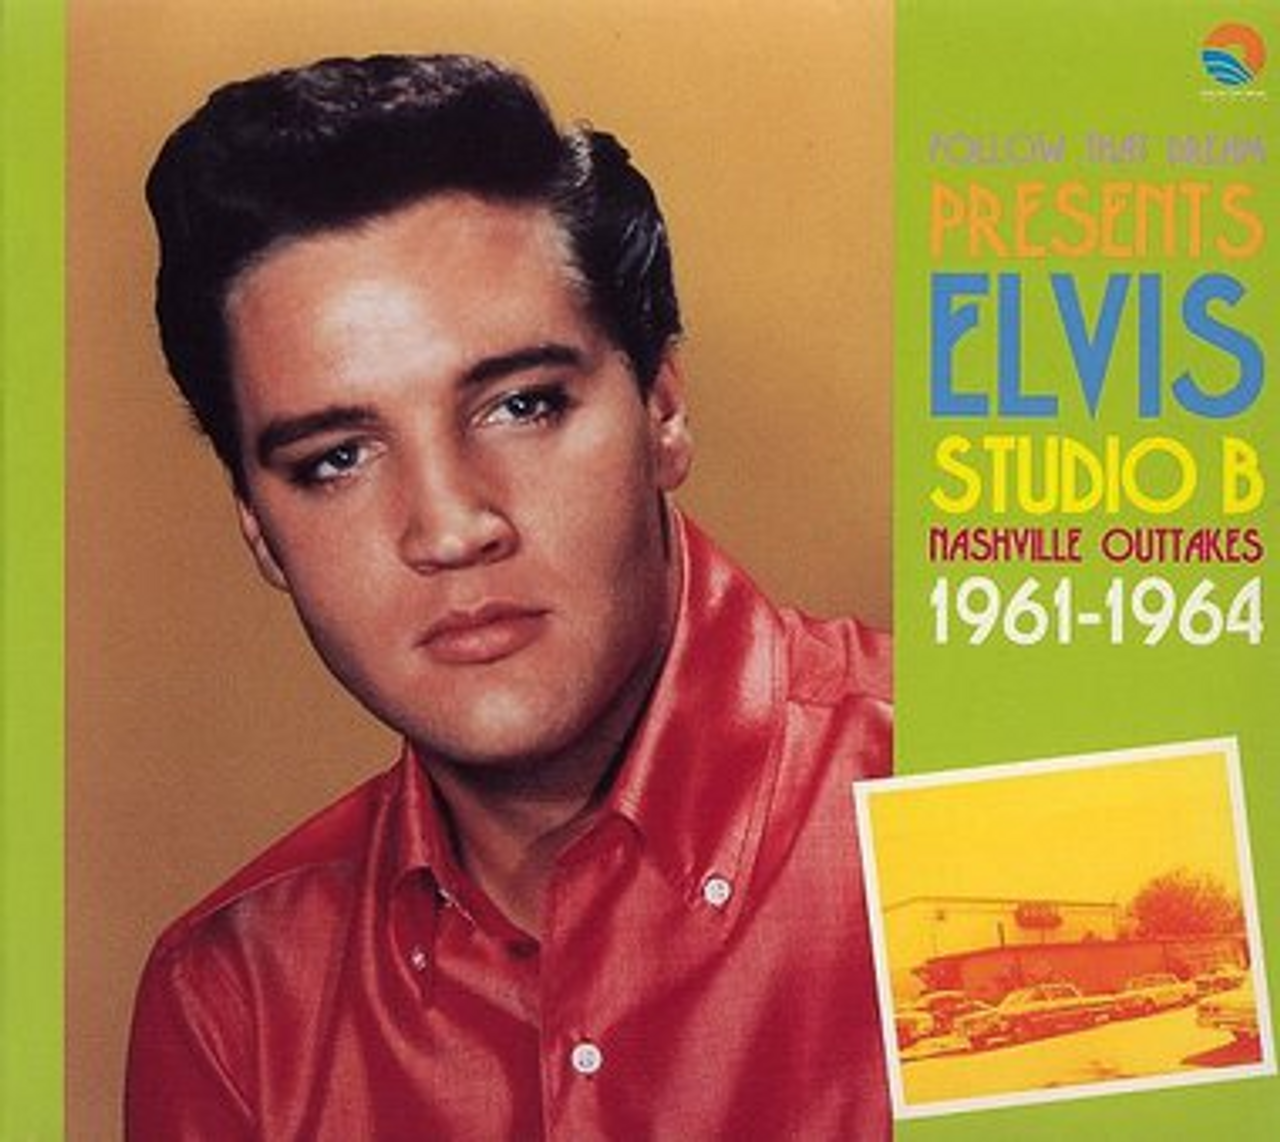 Studio B Elvis Presley Studio outtakes FTD CD 